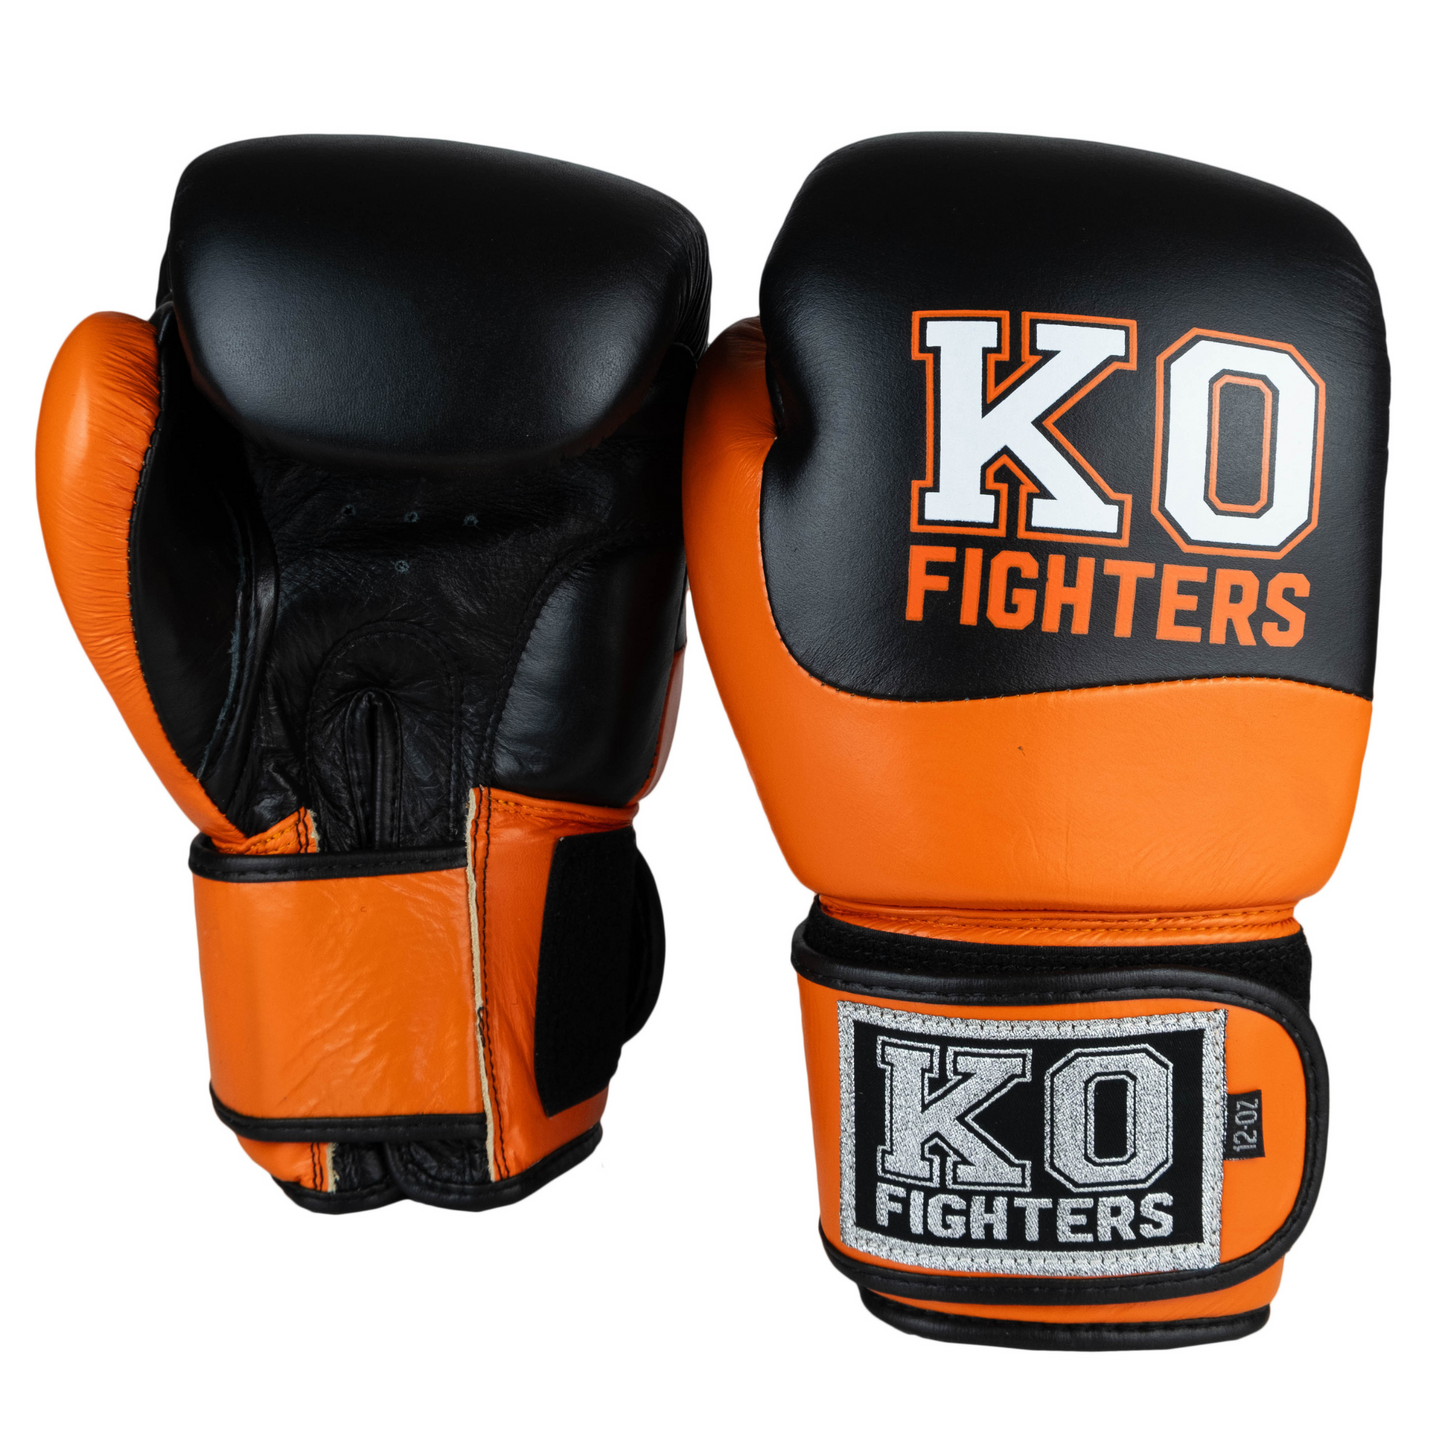 (Kick) Boxing gloves Lightning Jab Orange